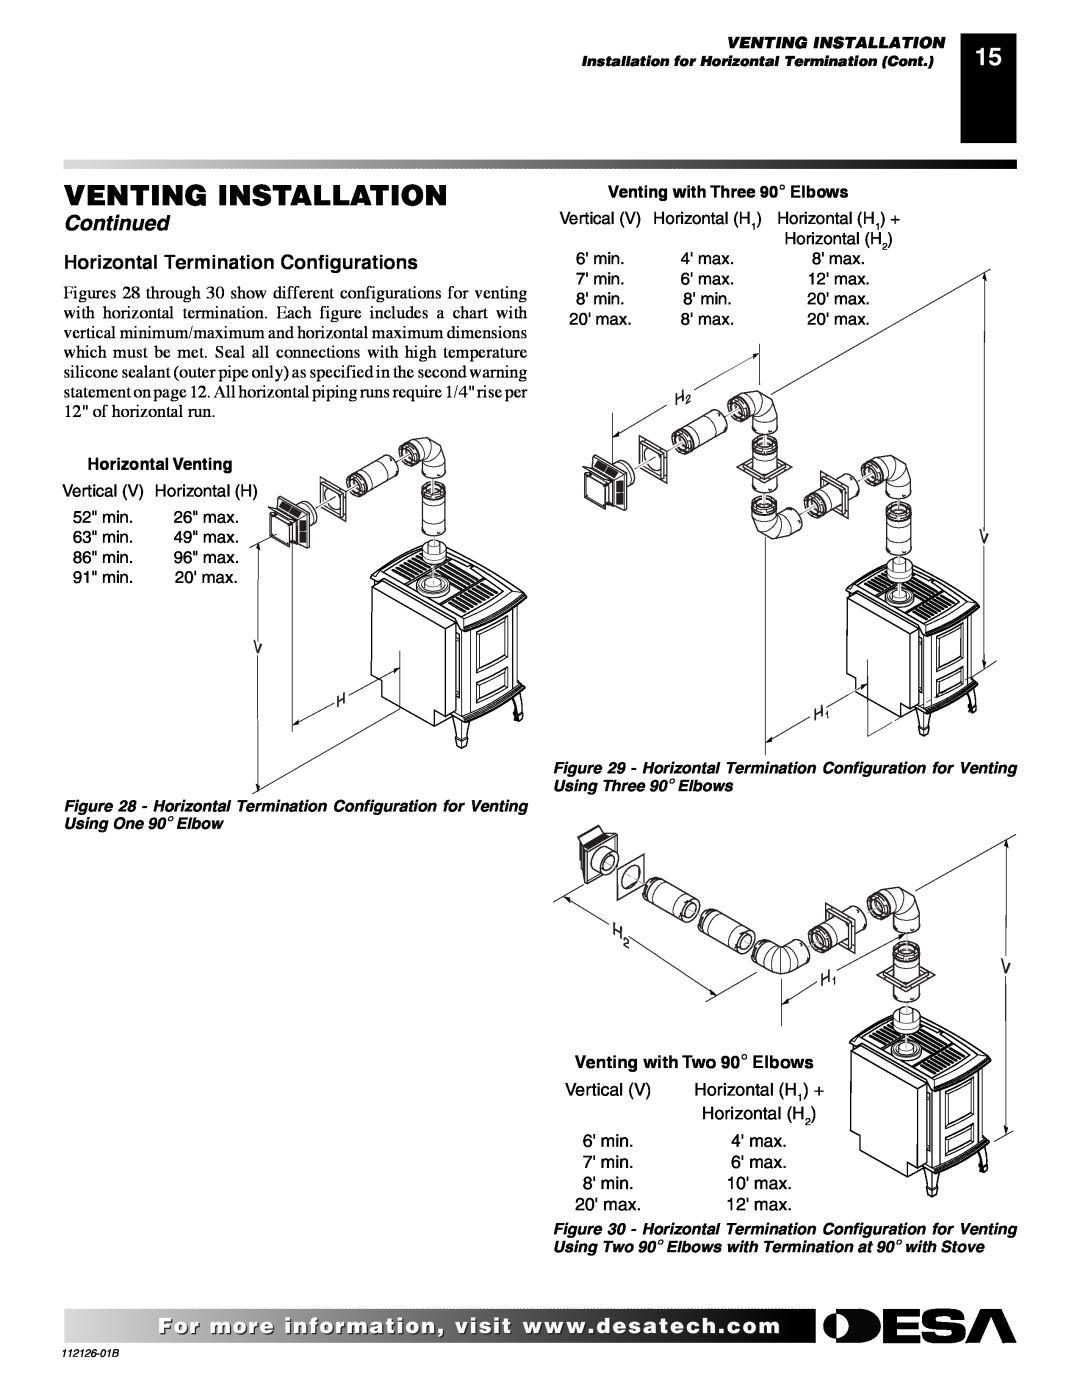 Desa SDVBPD, SDVBND Venting Installation, Continued, Horizontal Termination Configurations, Horizontal Venting 